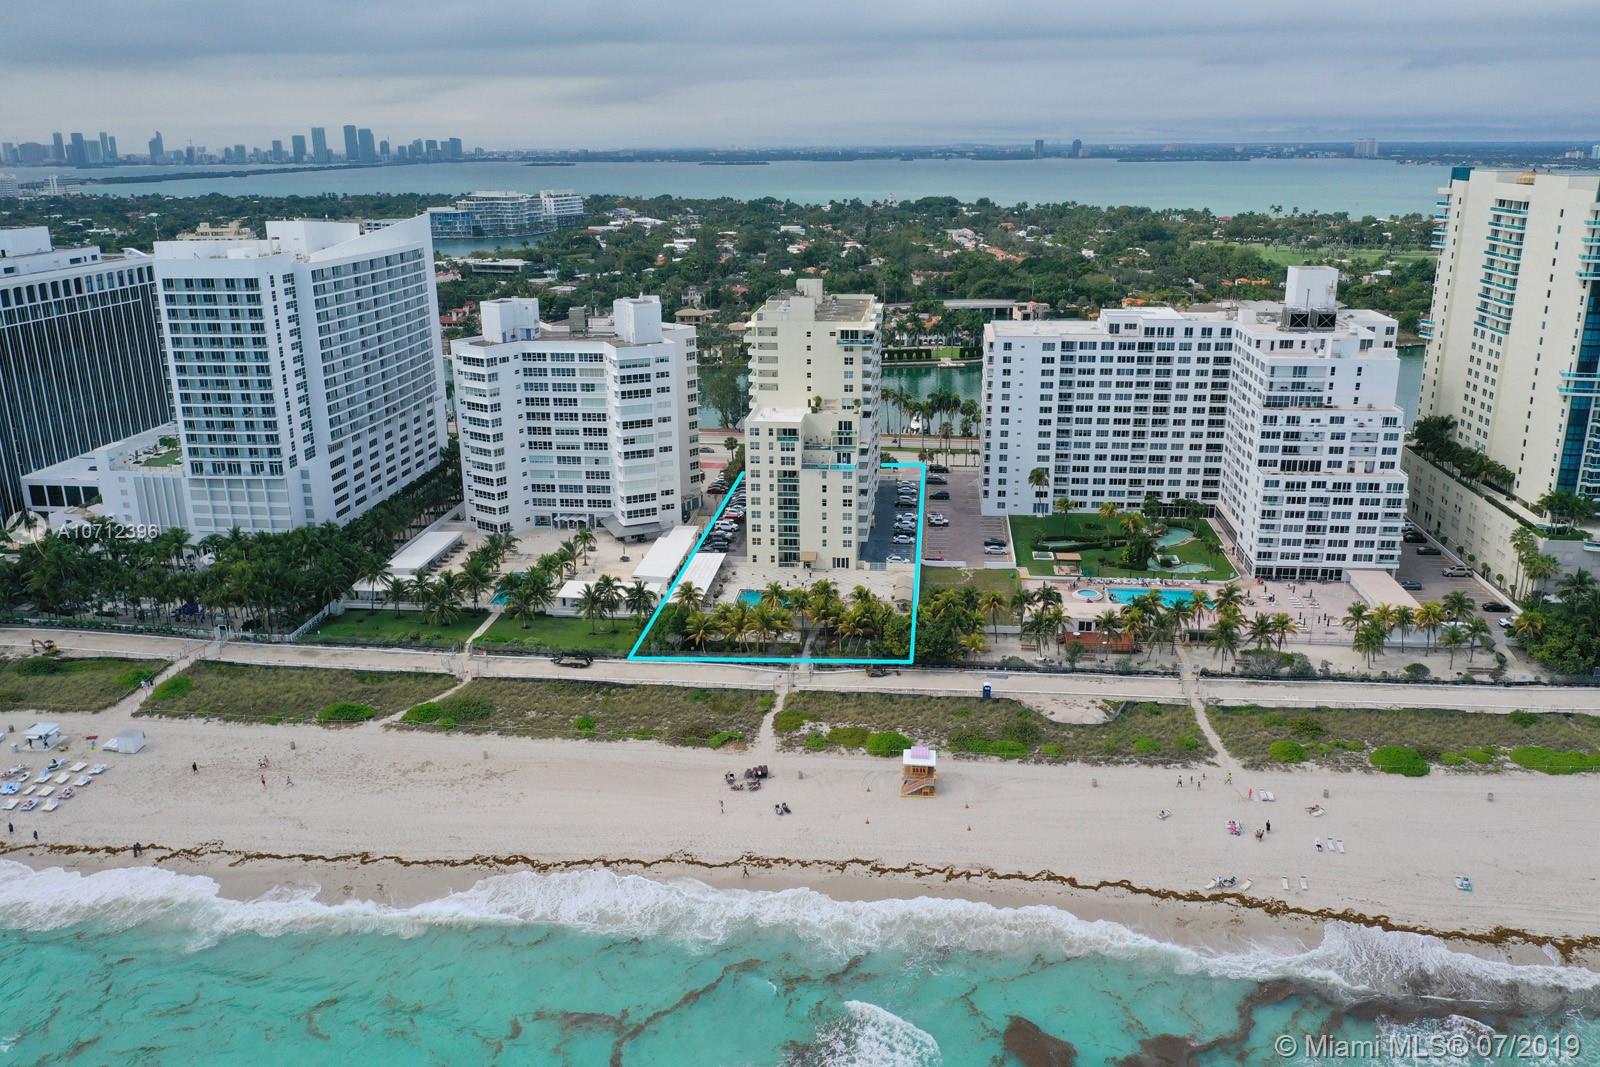 Carriage Club South Unit #11F Condo for Sale in Mid-Beach - Miami Beach